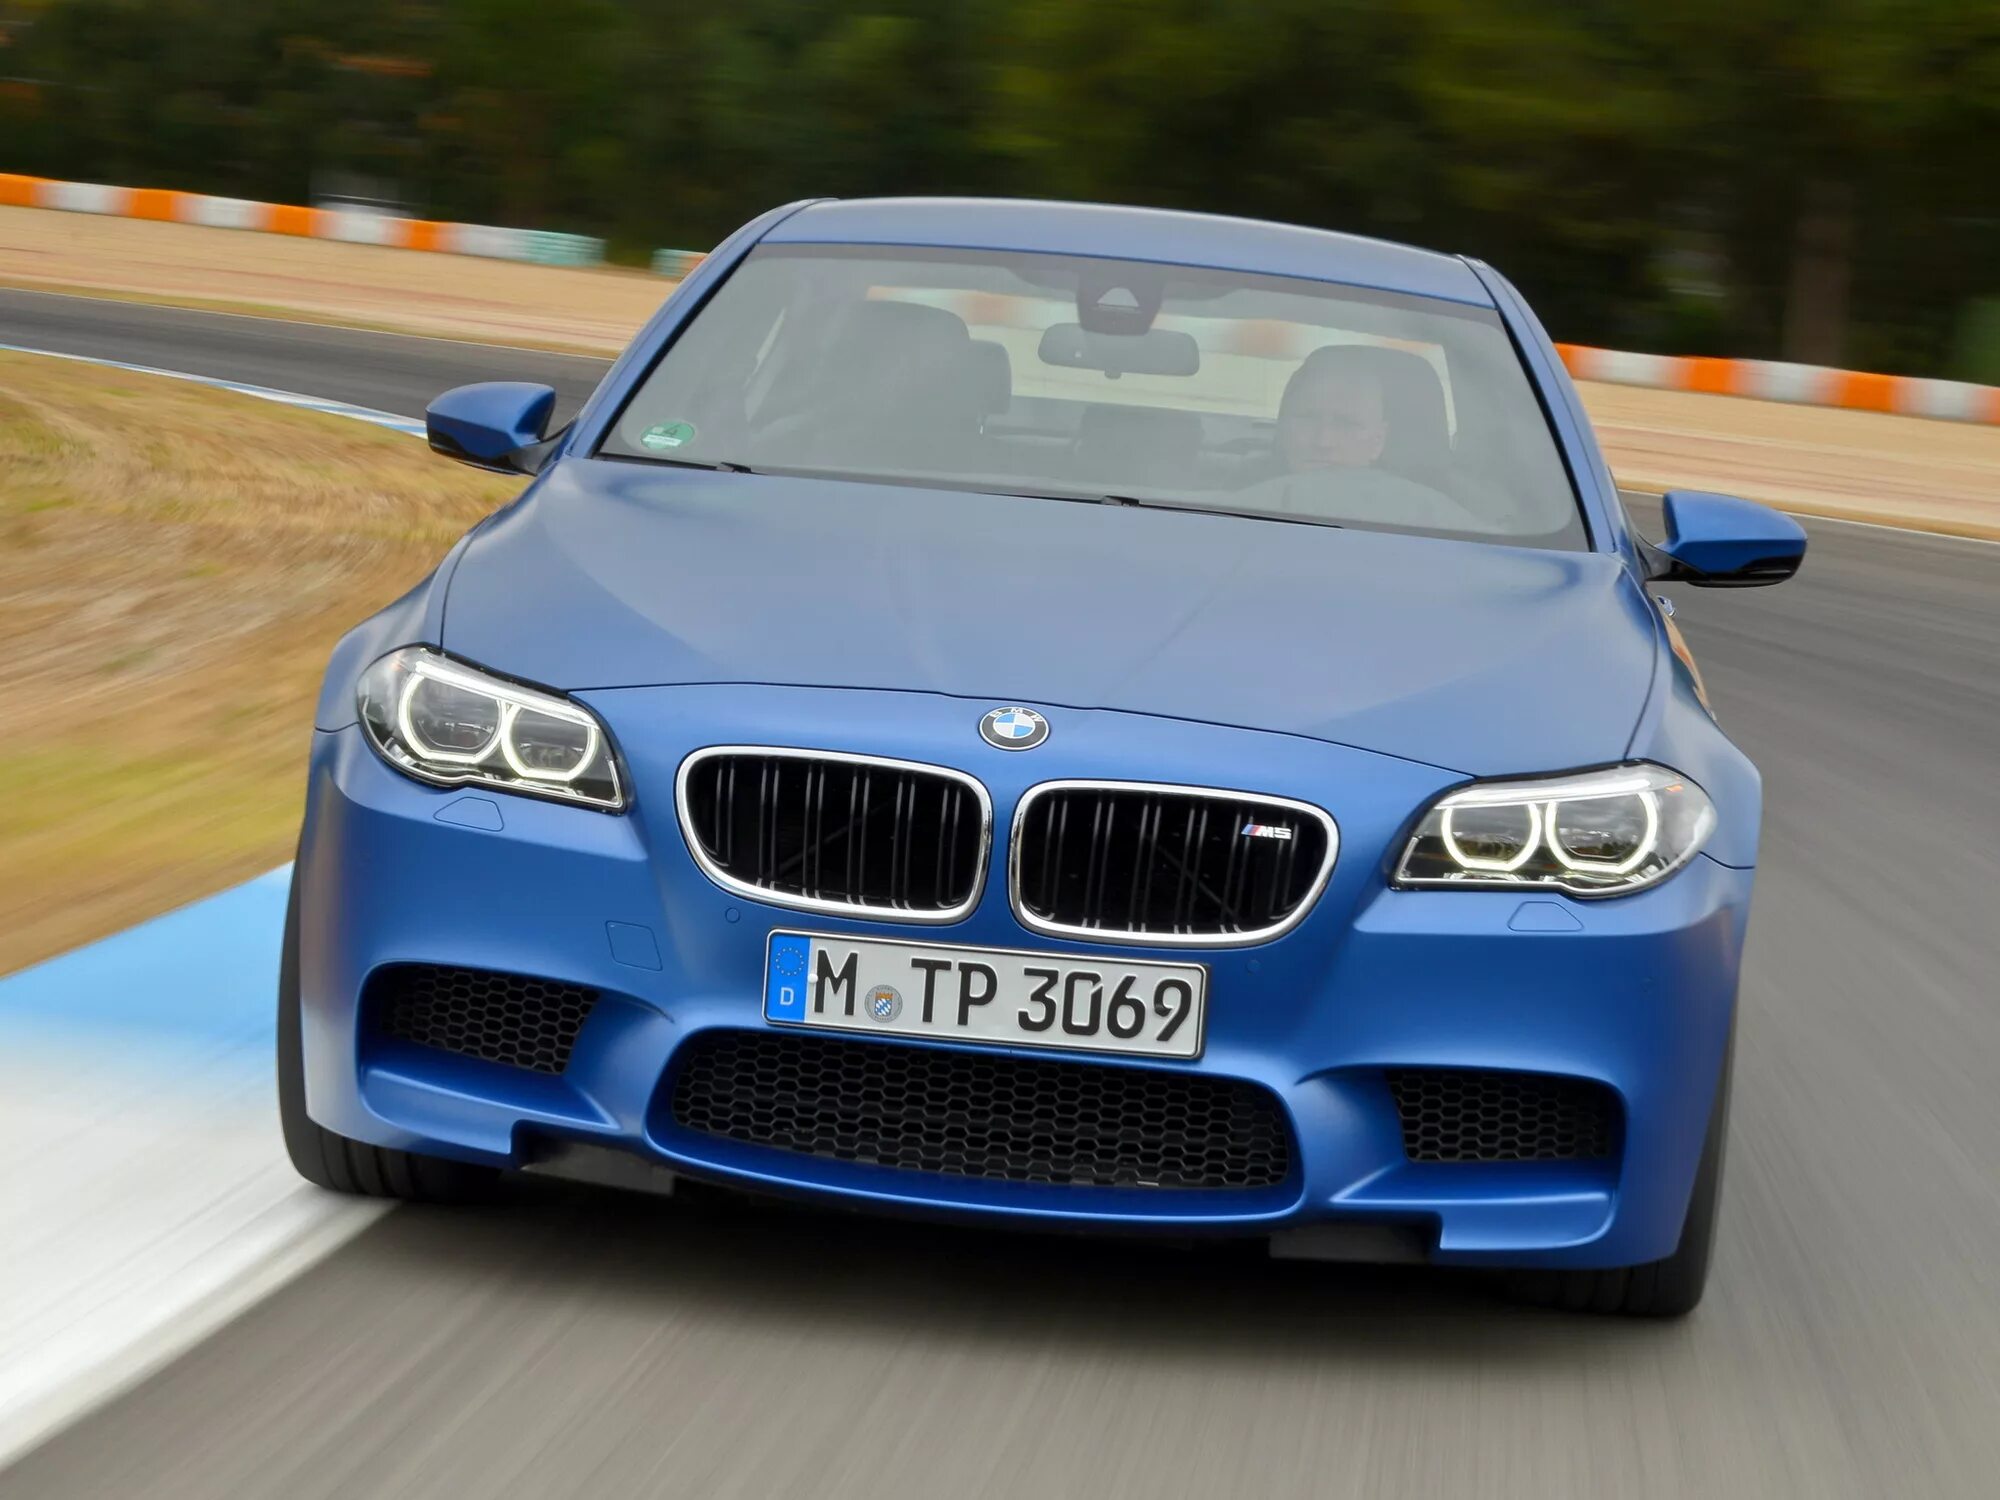 Bmw m 10. BMW m5 f10 LCI. BMW m5 f10 Competition. BMW m5 2016. BMW m5 f10 2013.